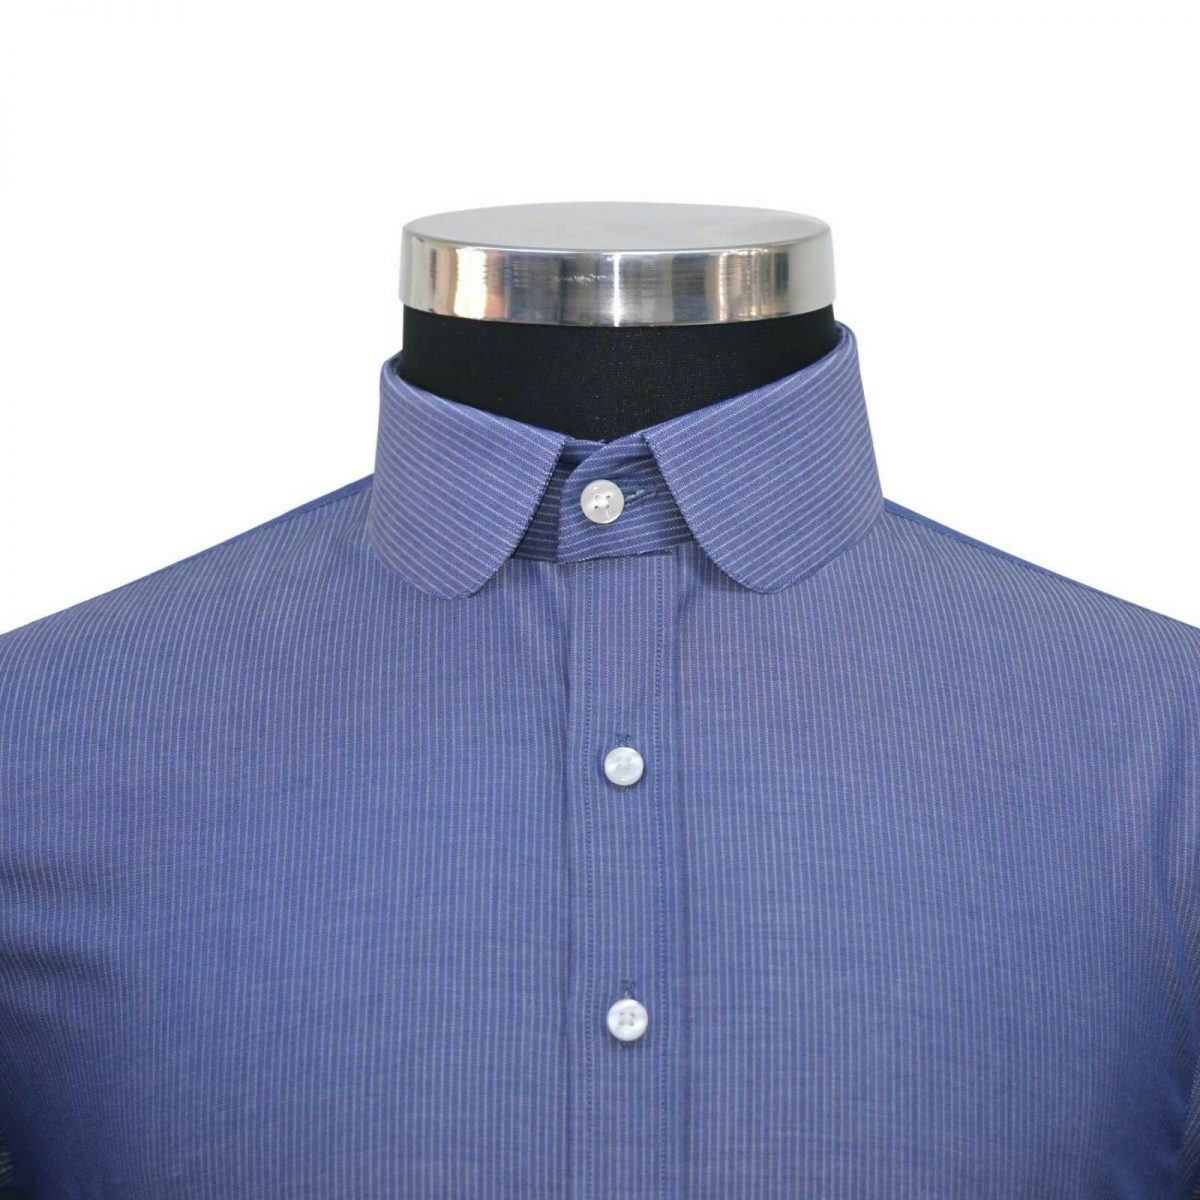 Blue-Indigo Penny collar shirt - John Clothier London